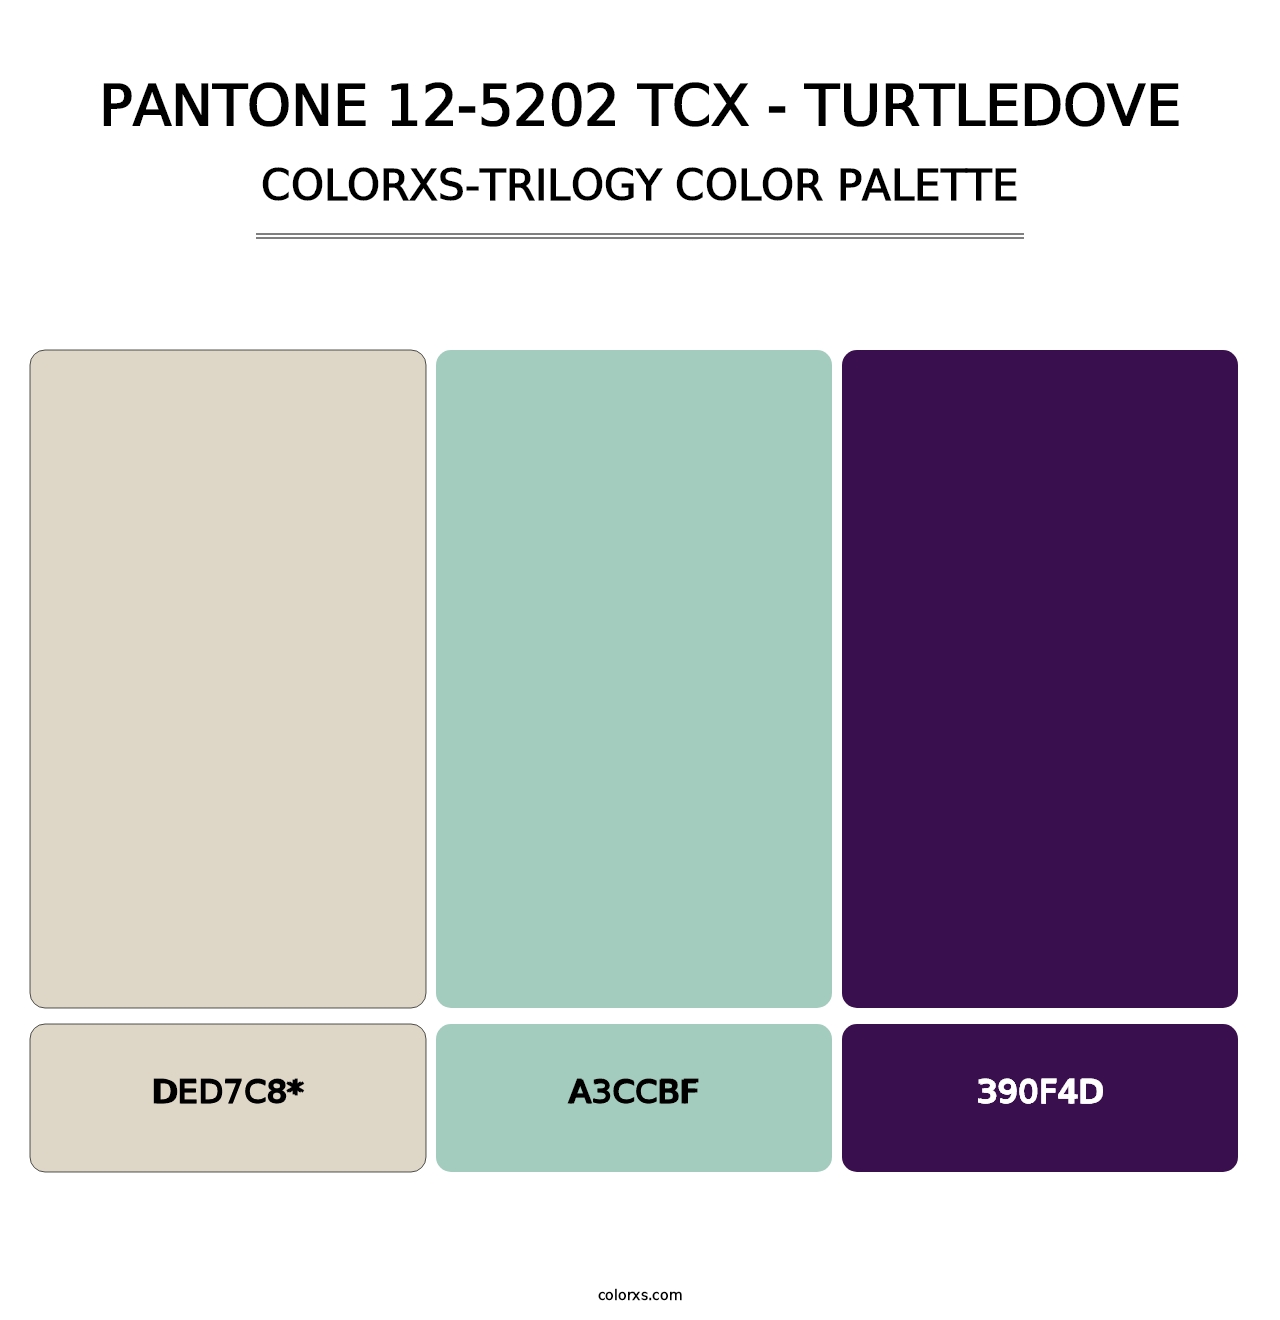 PANTONE 12-5202 TCX - Turtledove - Colorxs Trilogy Palette